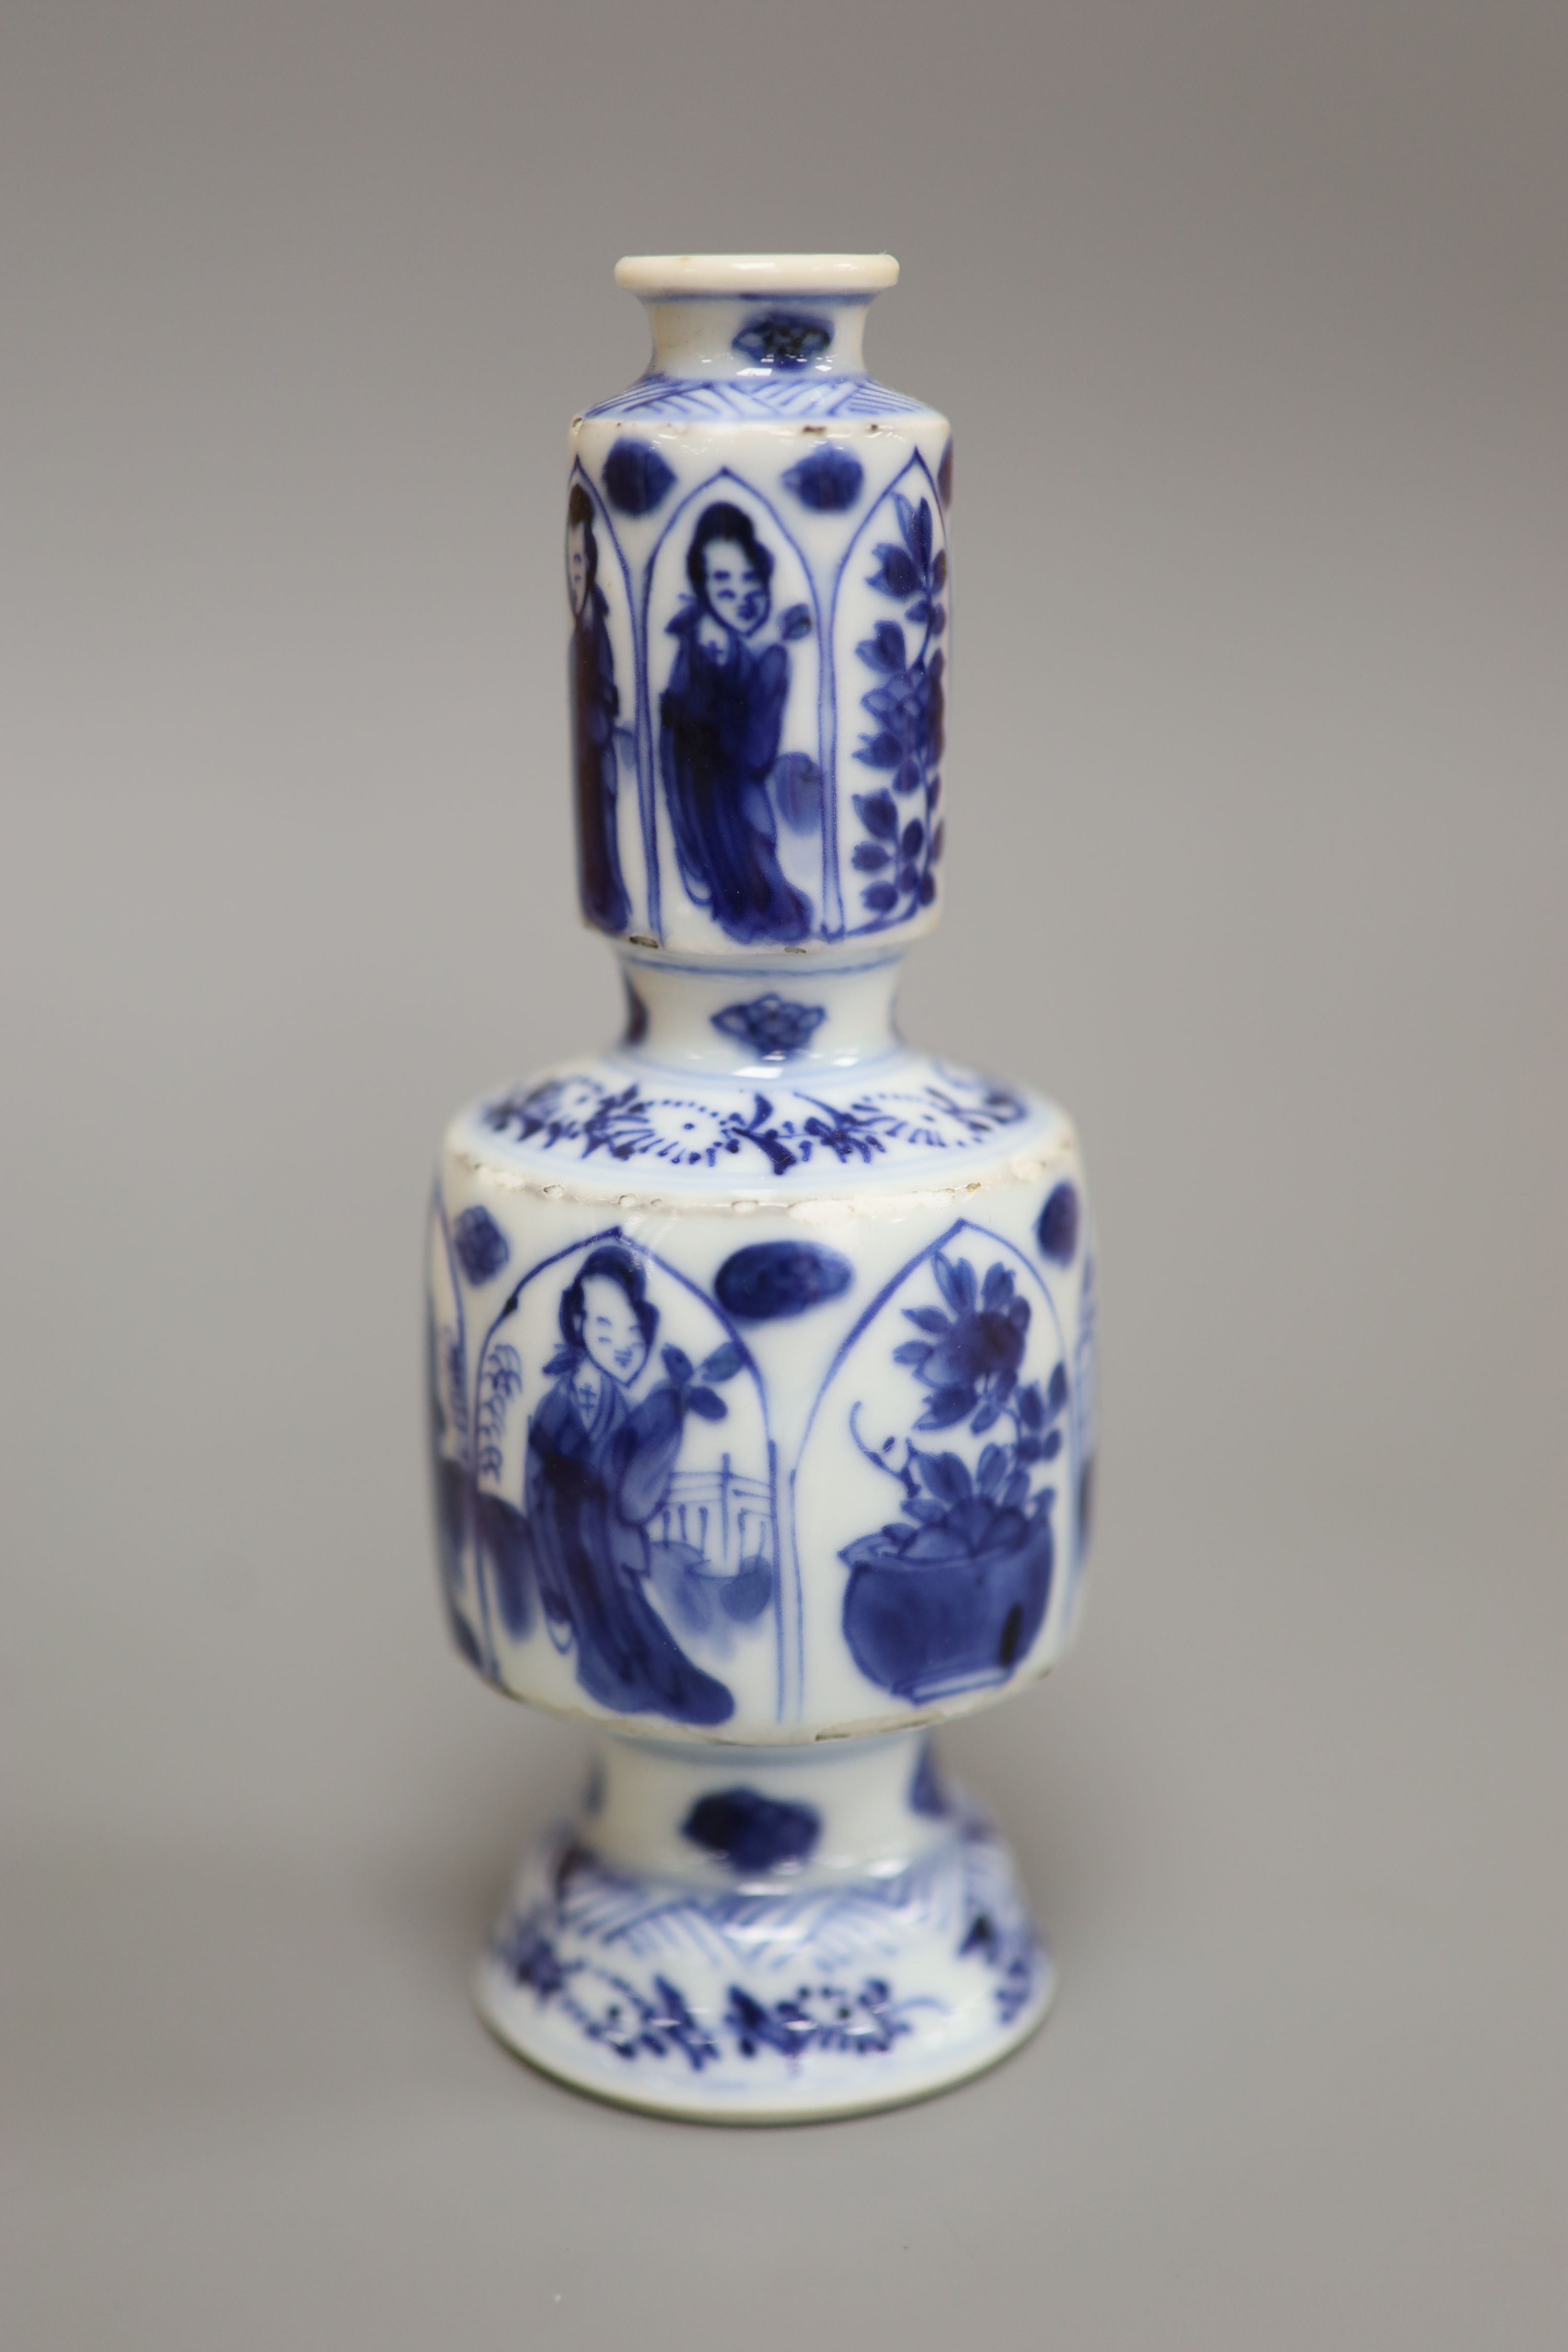 A Chinese Kangxi blue and white vase, ‘Jade’ mark to base, height 13cm - Image 3 of 7